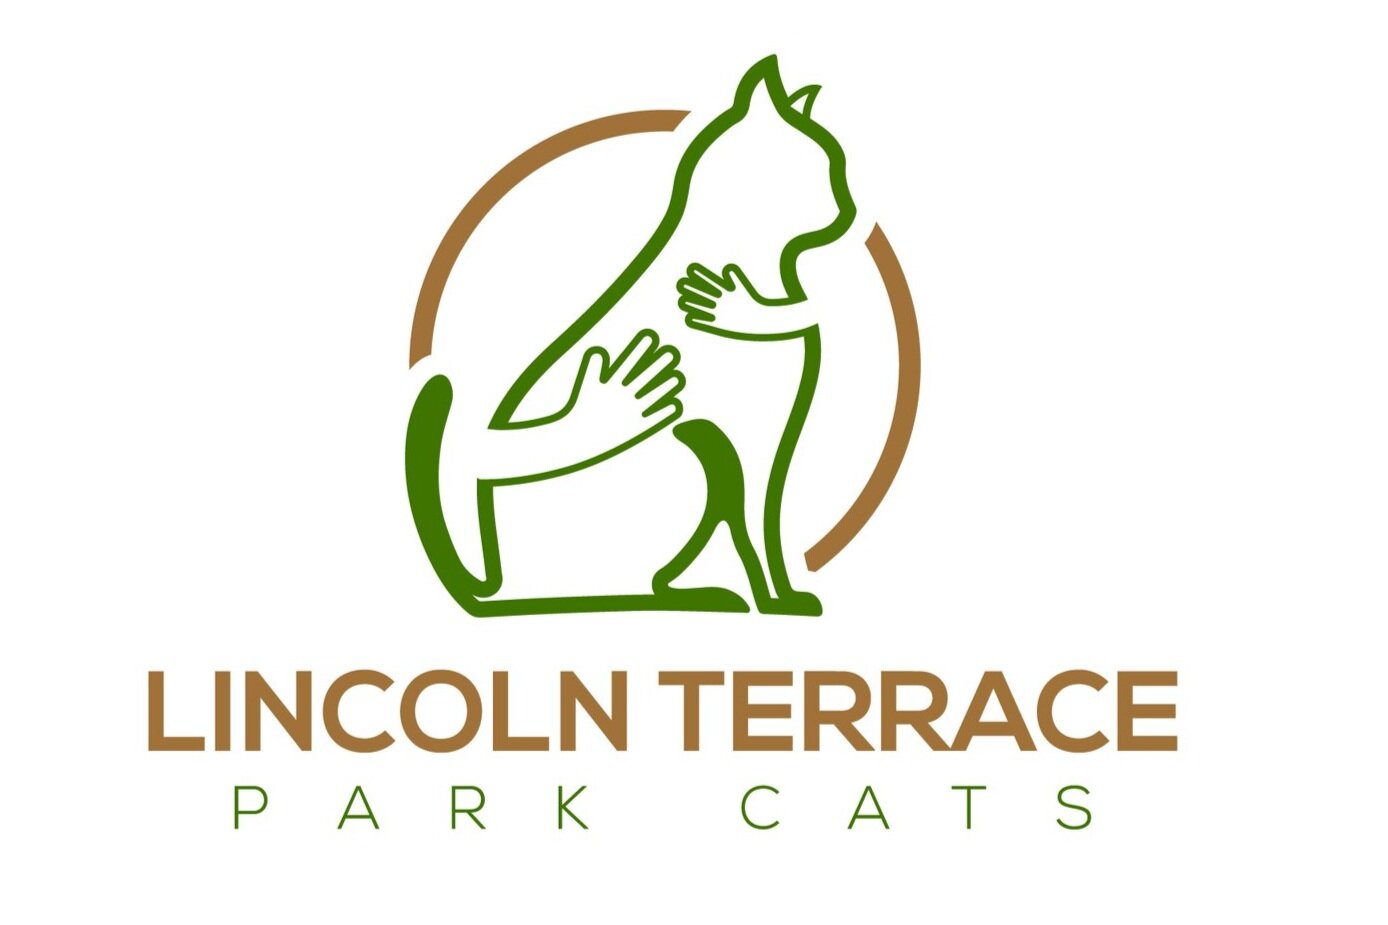 Lincoln Terrace Park Cats